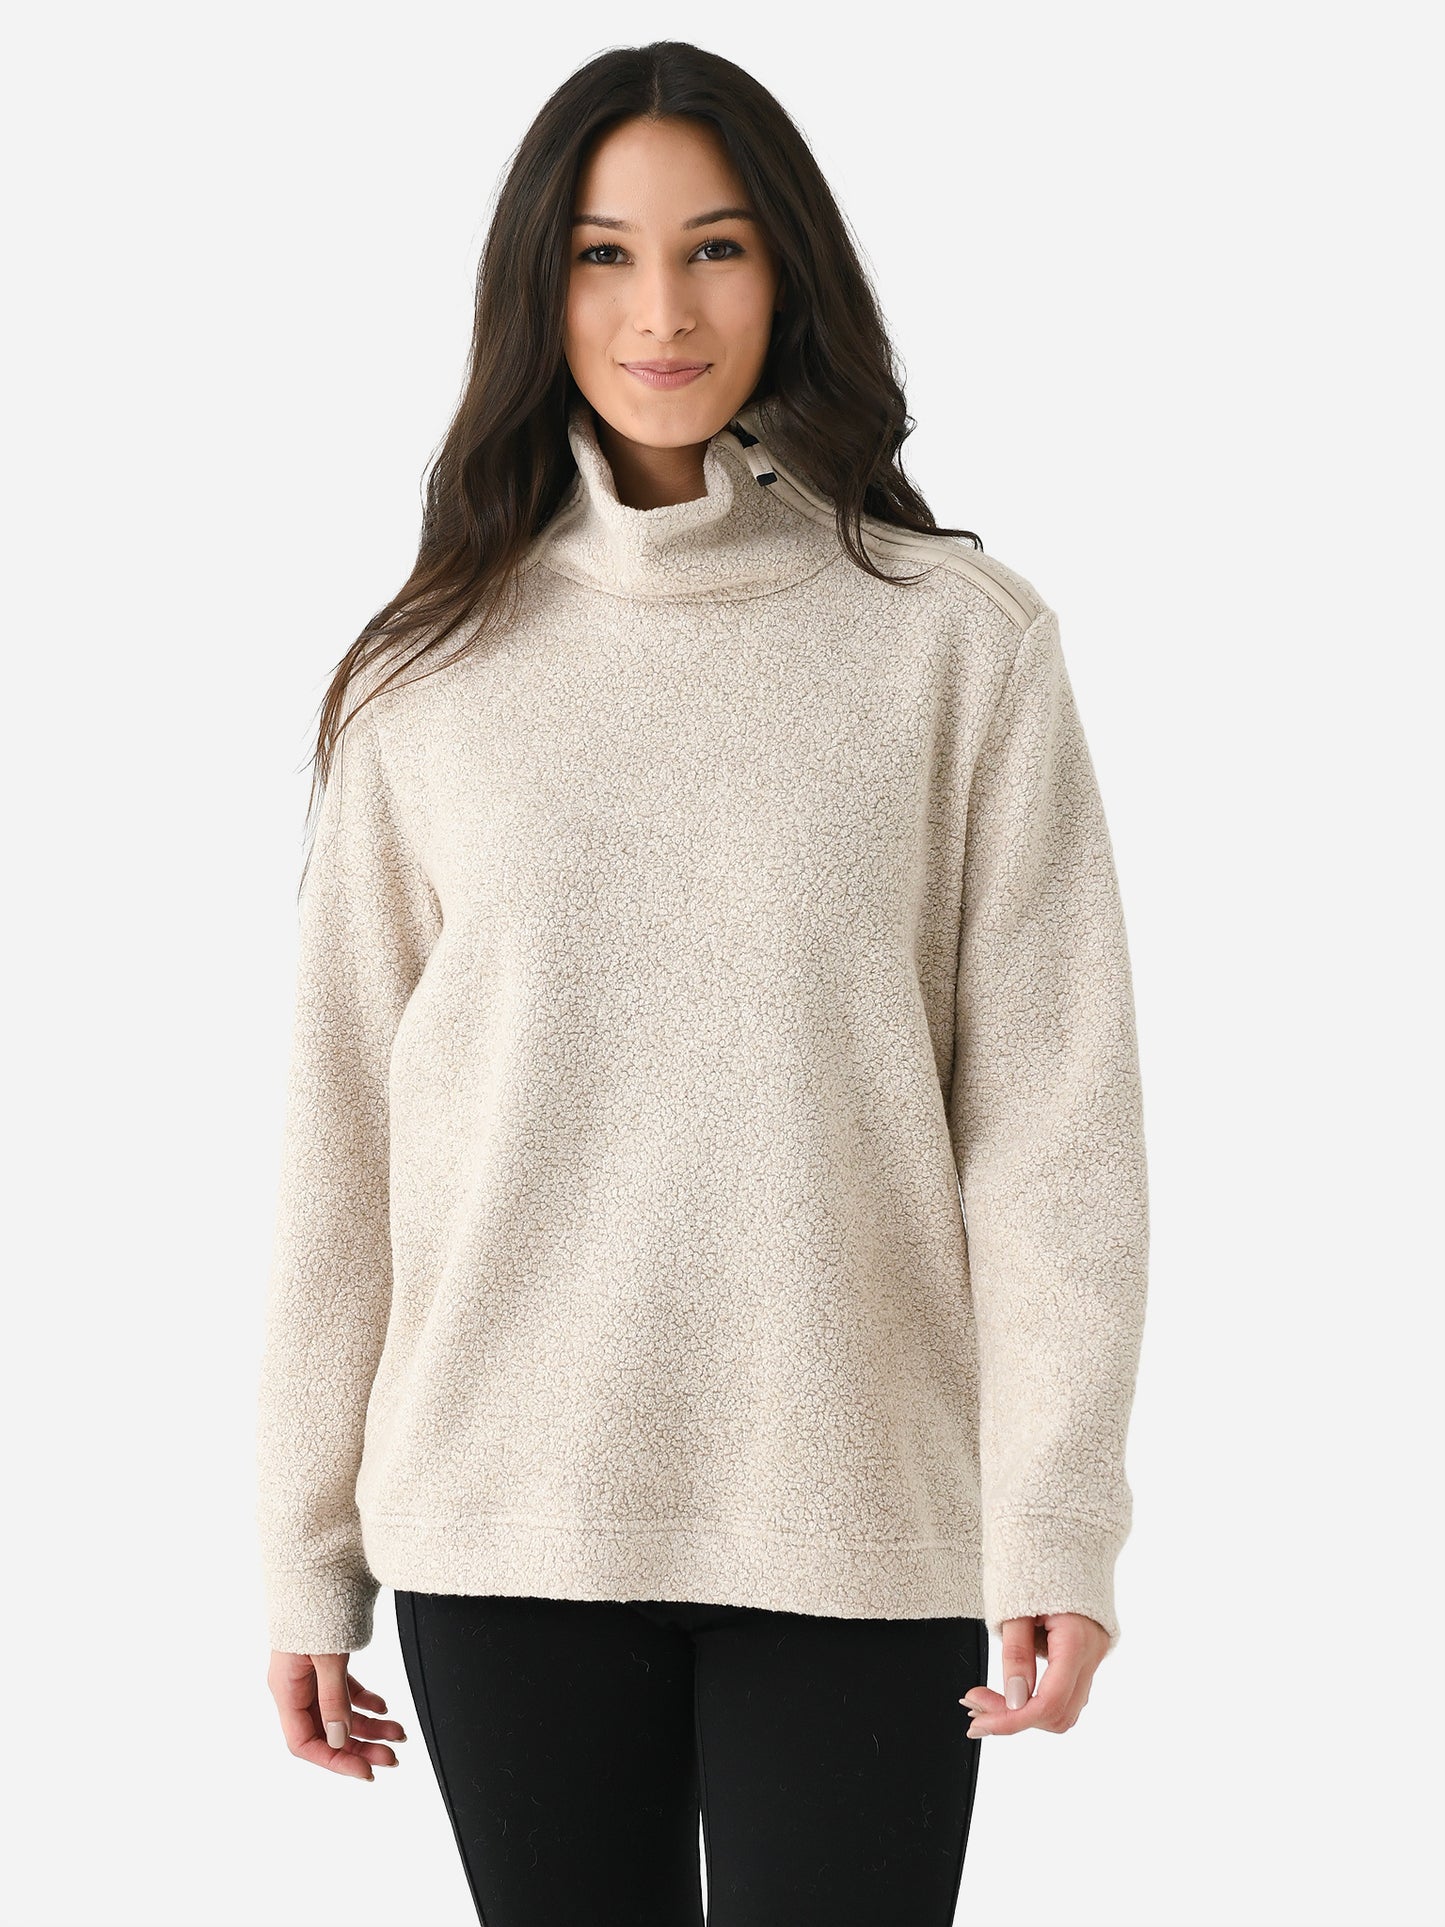 Frauenschuh Women's Belinda Sweater